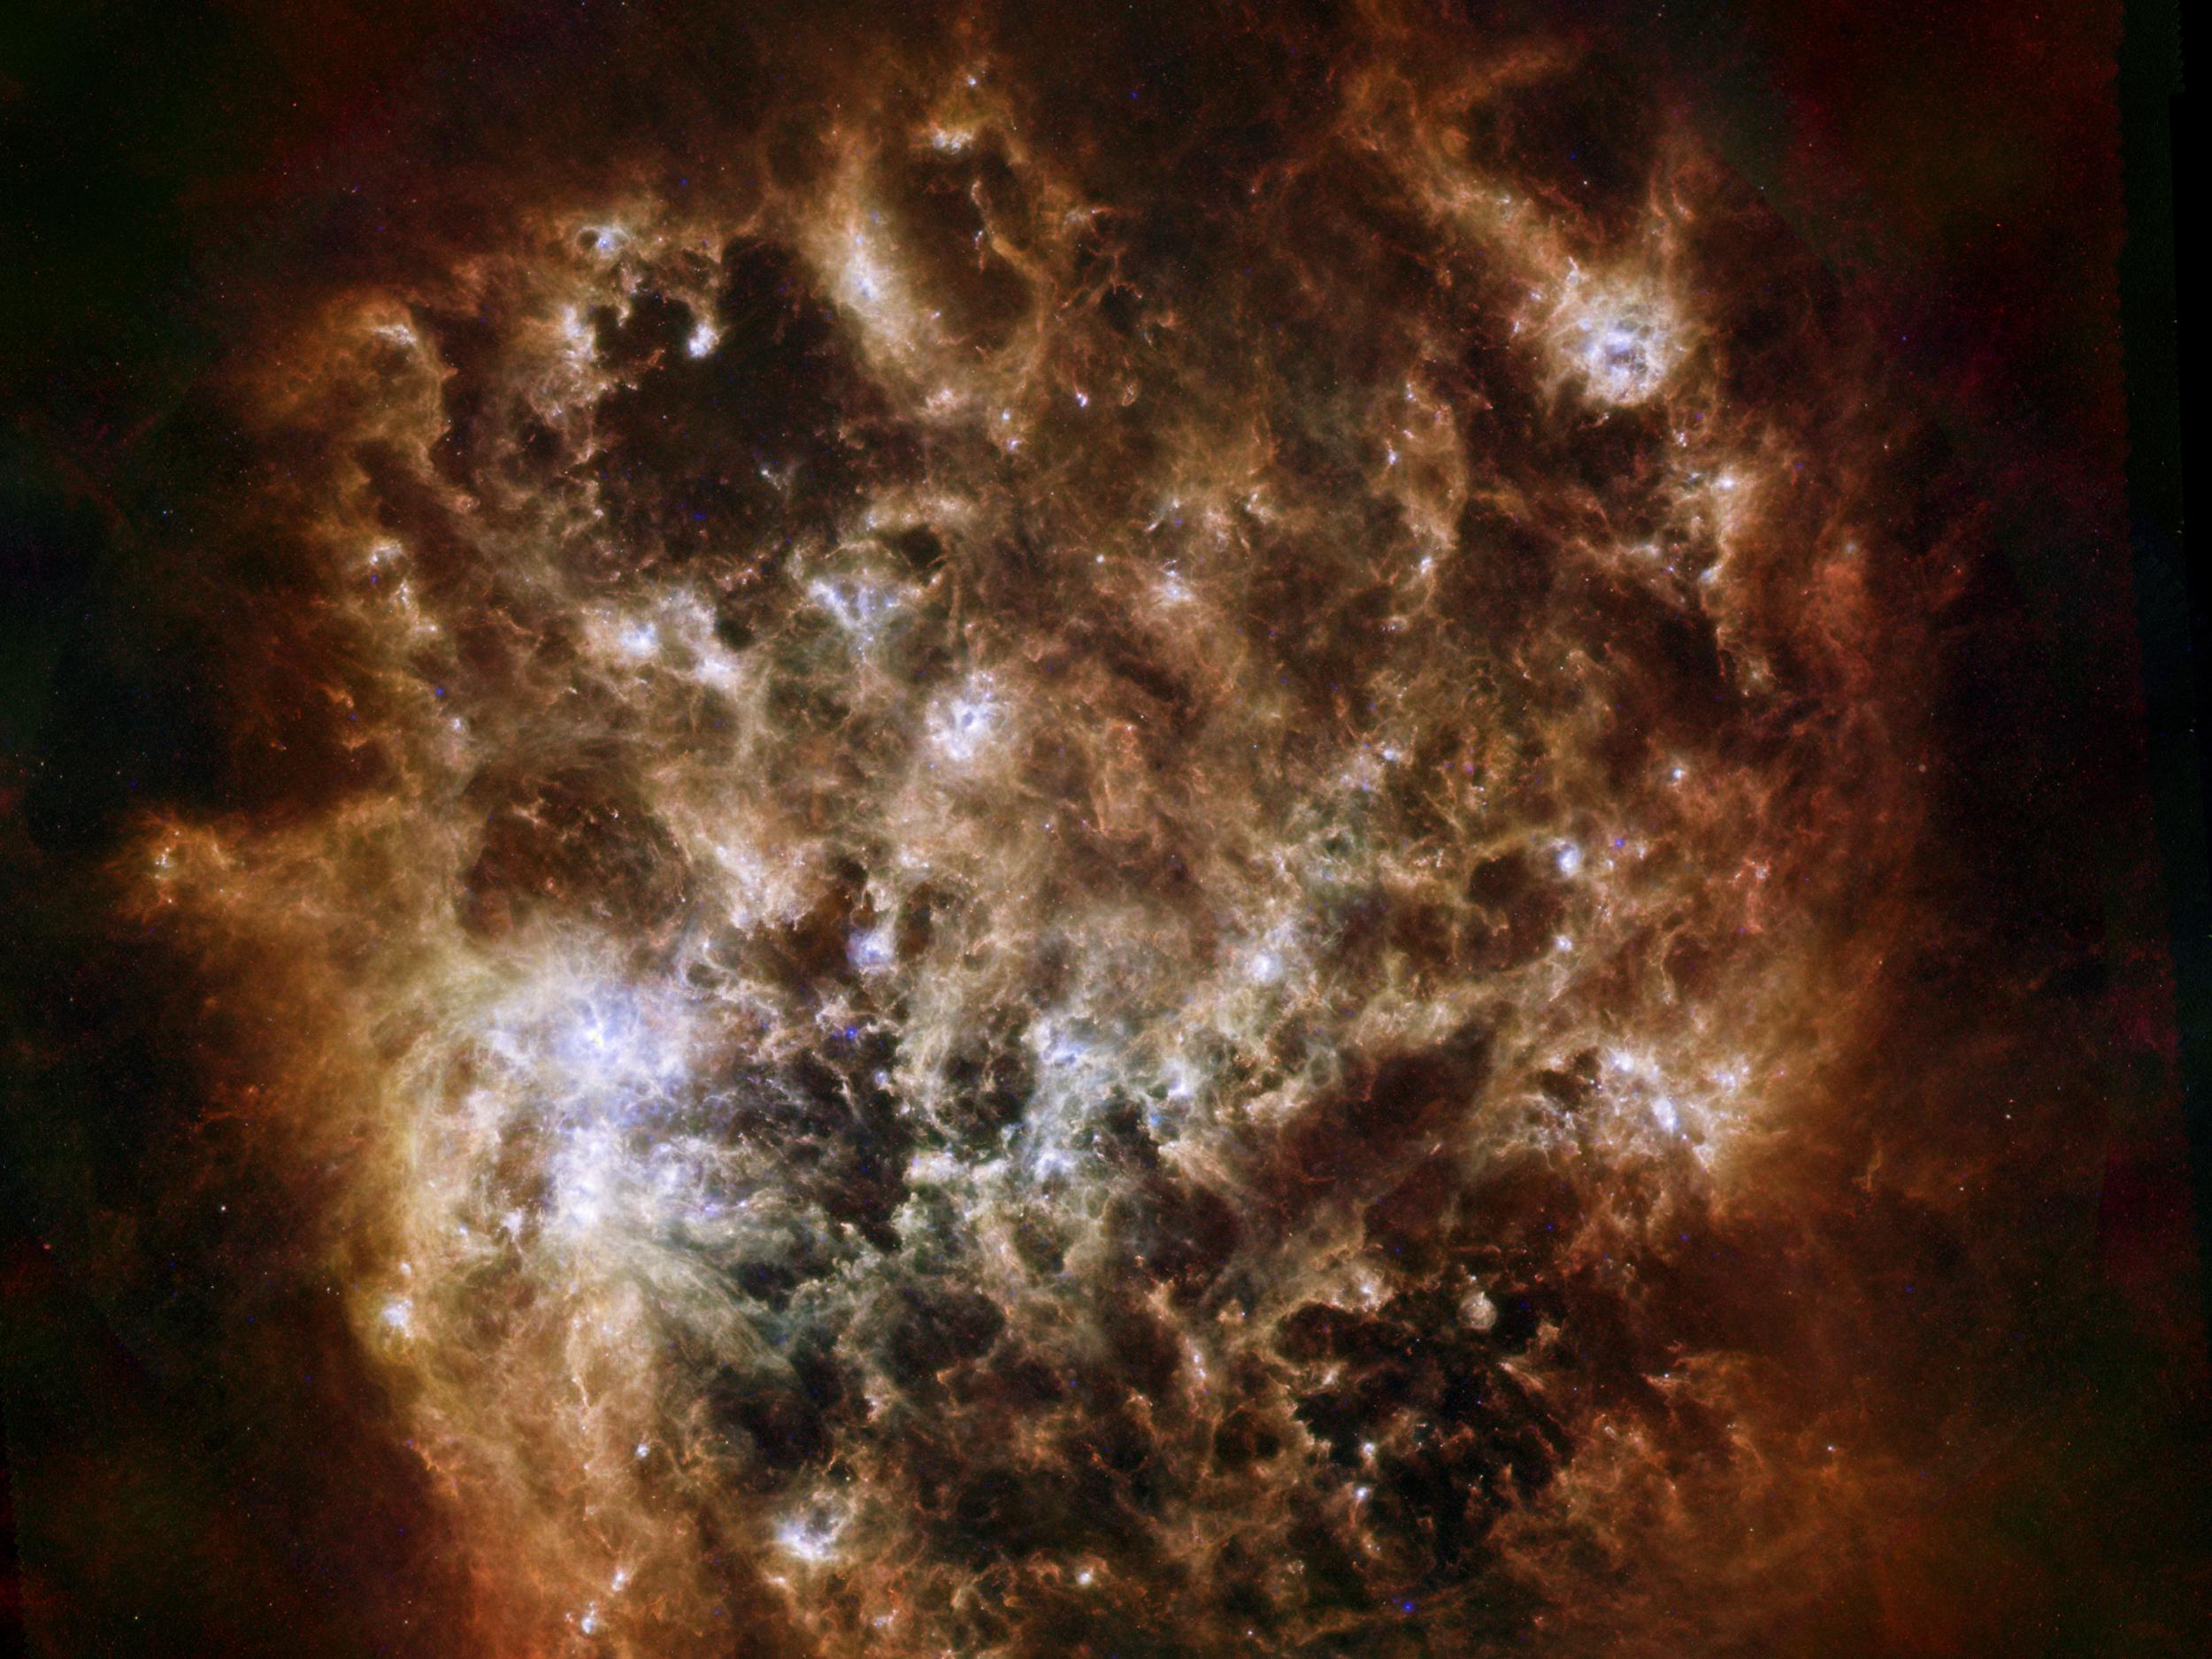 Large Magellanic Cloud galaxy